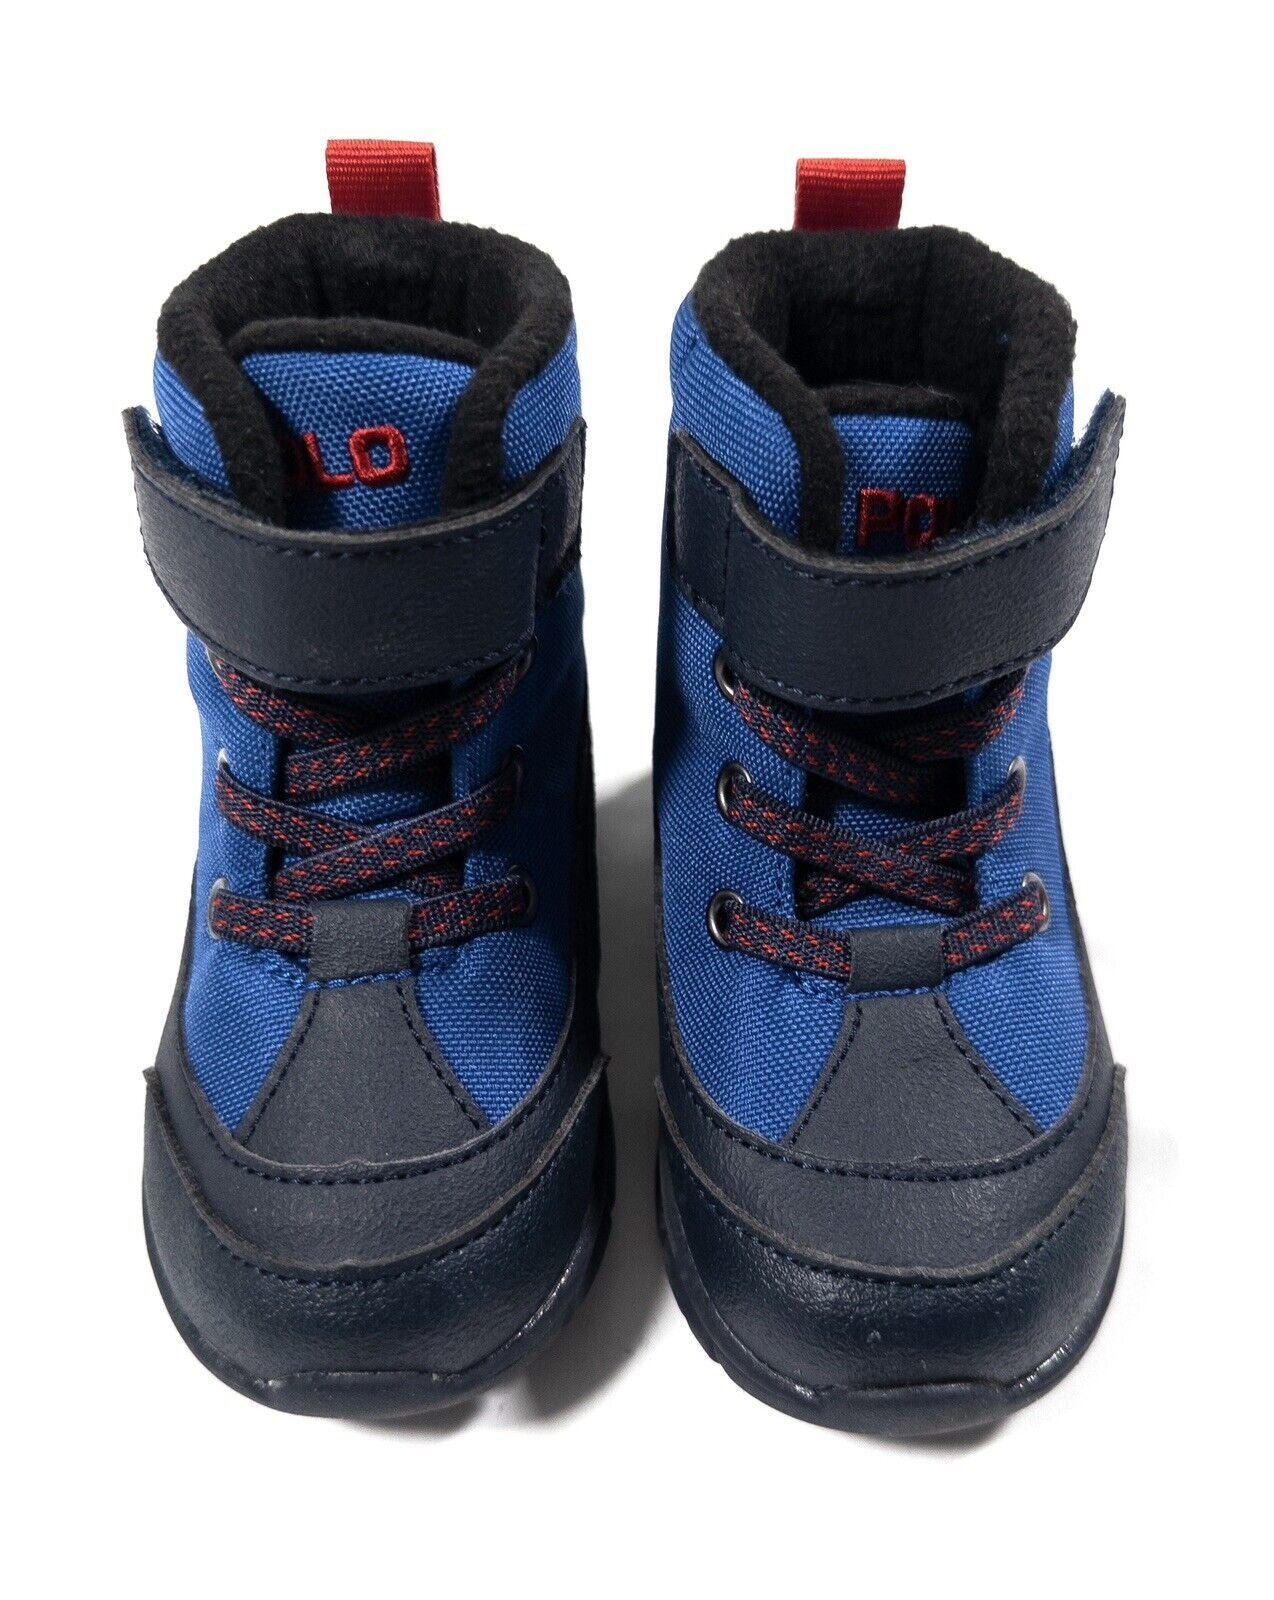 POLO RALPH LAUREN Infant Boys Blue High Top Winter Boots Size UK 4